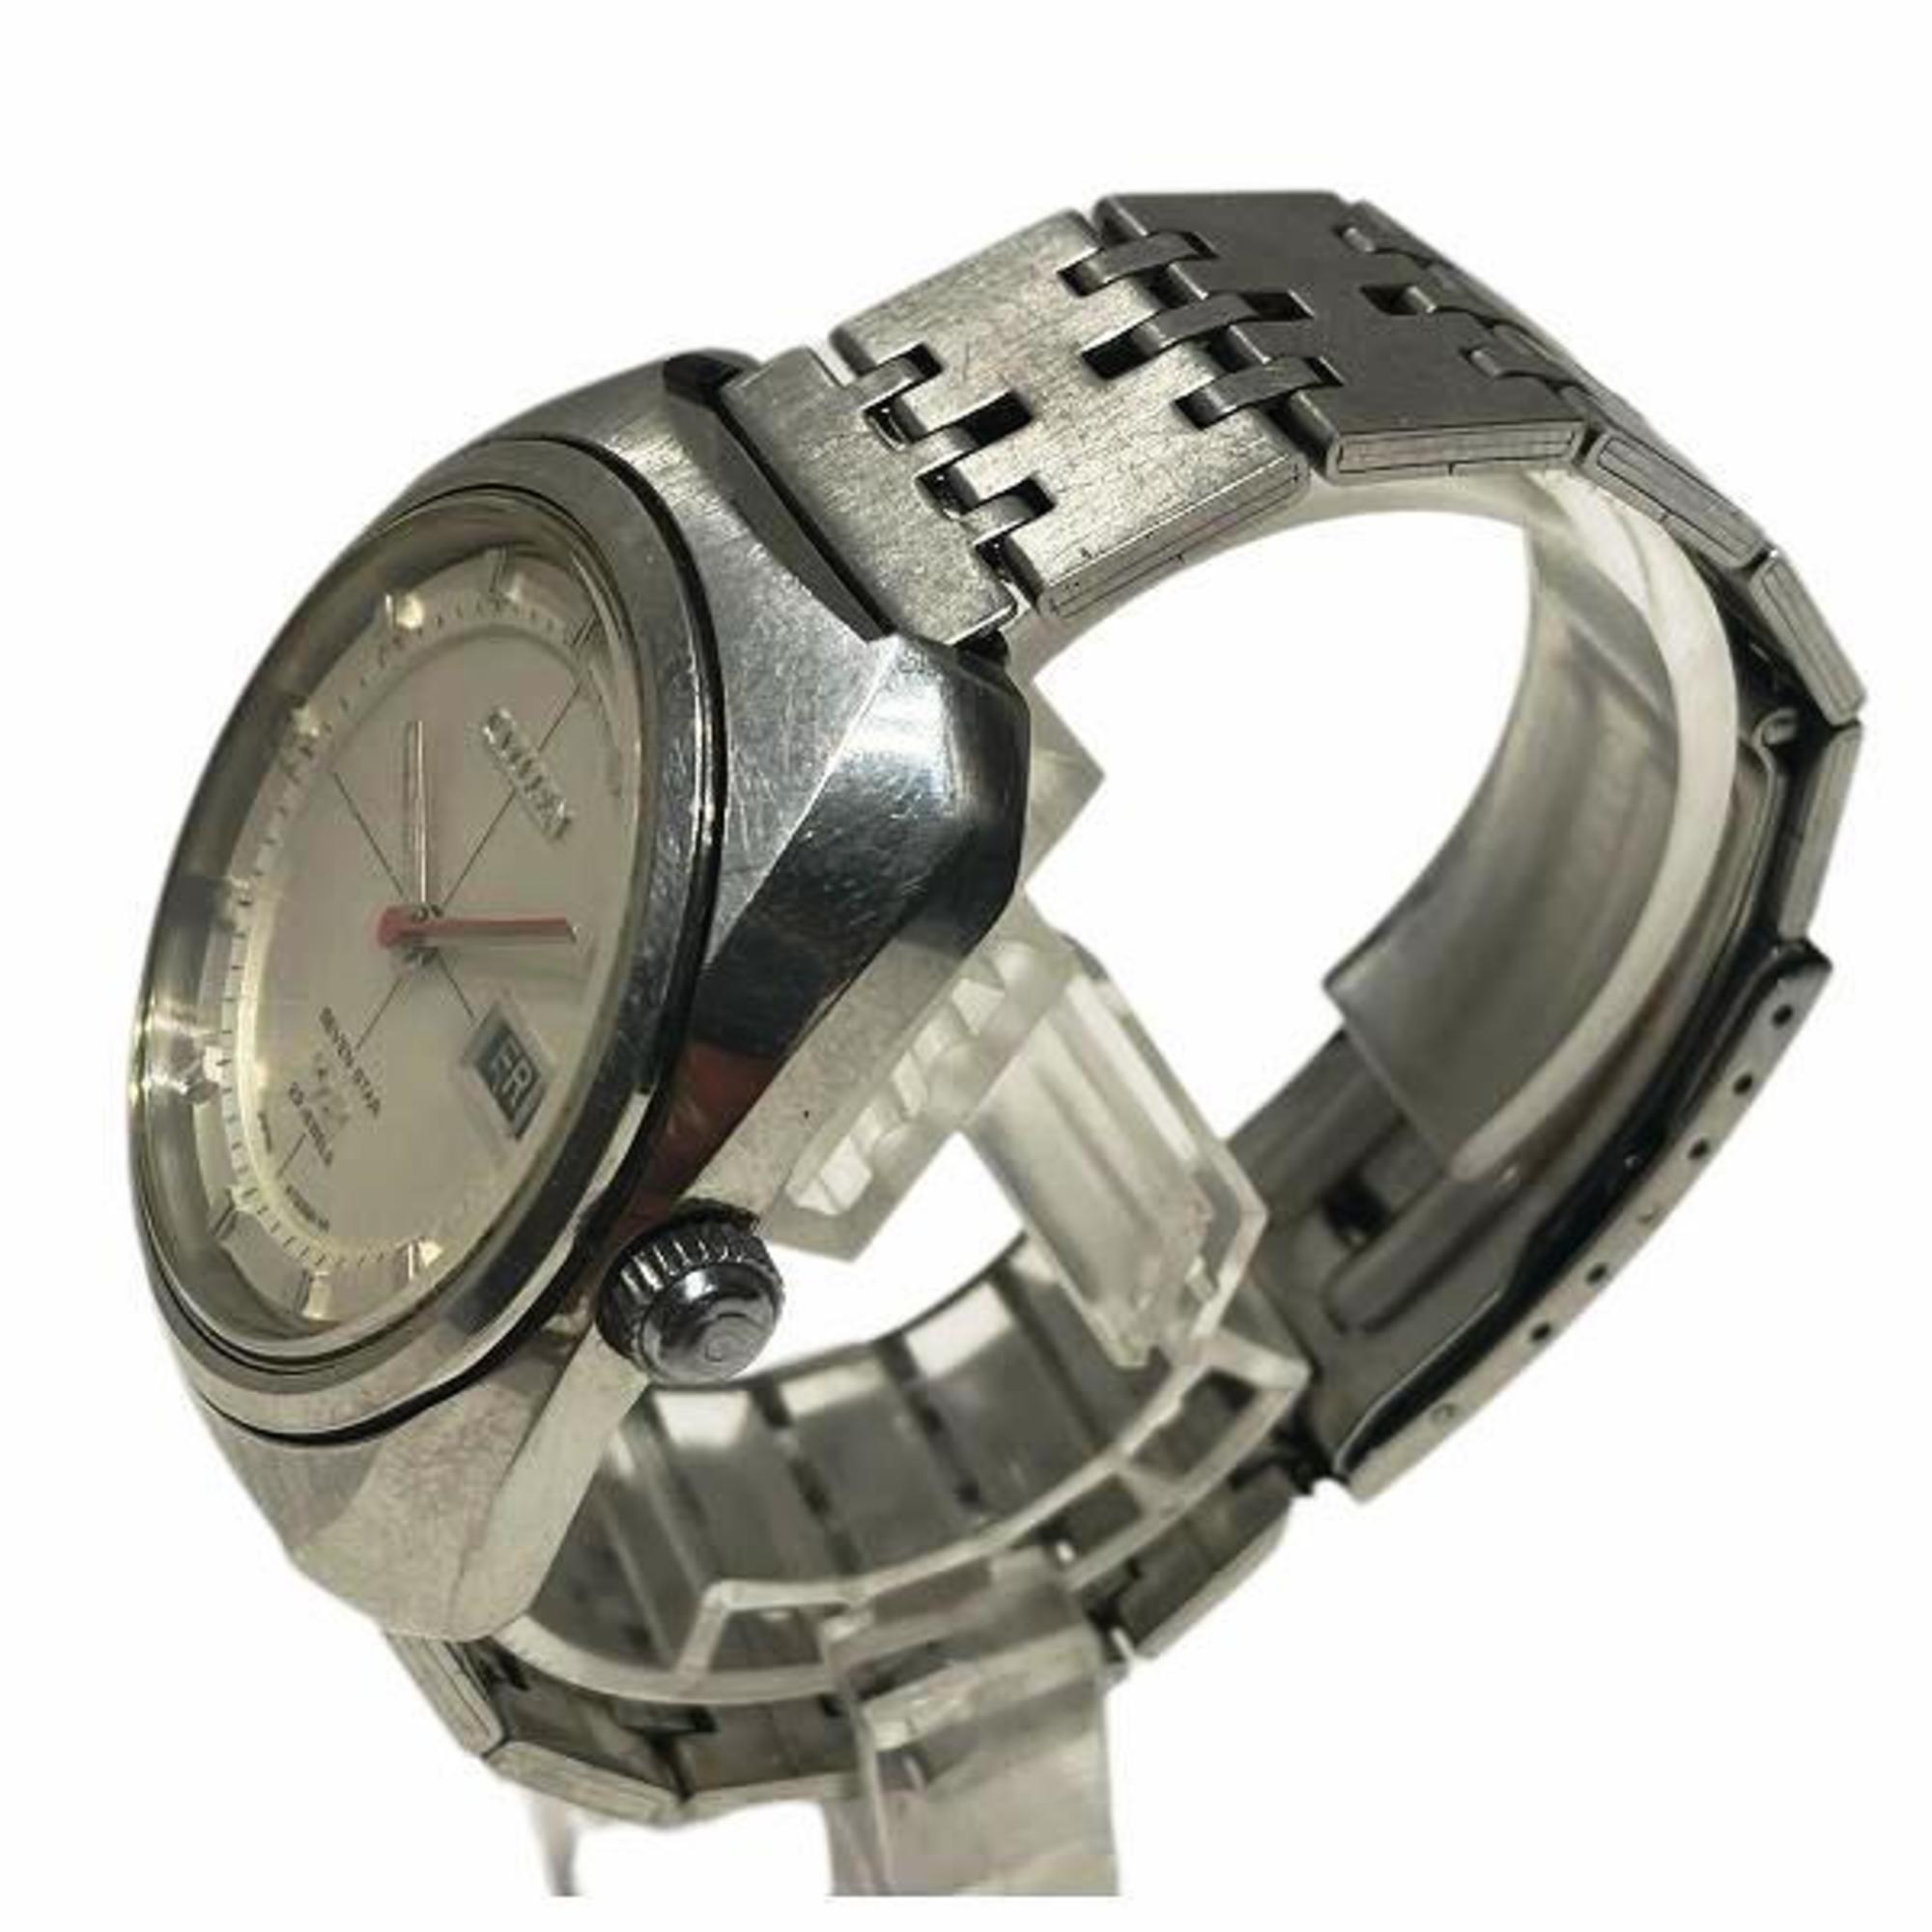 Citizen Seven Star V2 4-720113T Automatic Watch Men's